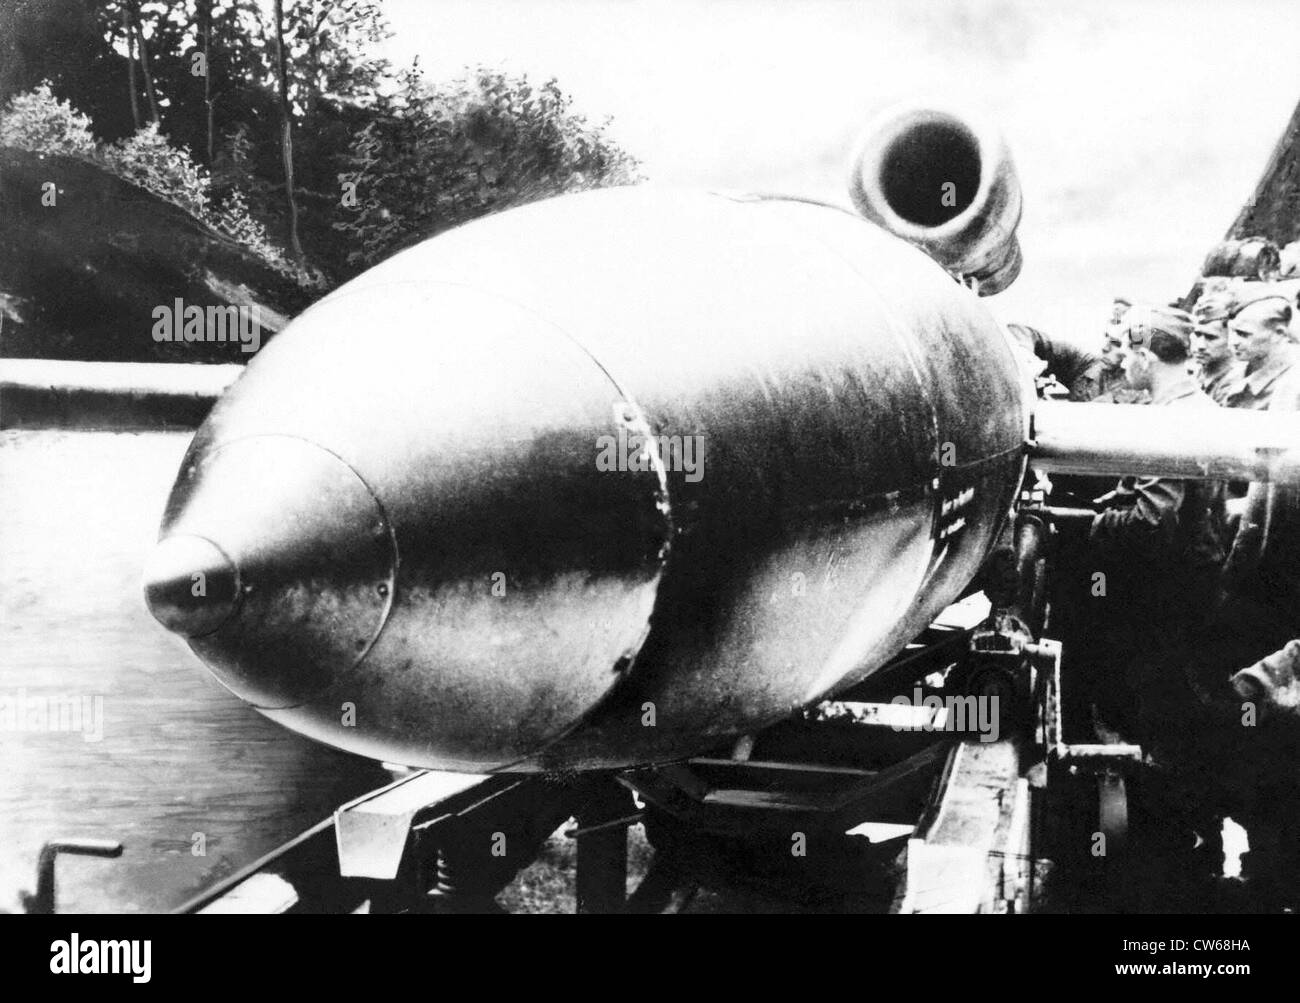 Fieseler Fi-103 (FZG-76) V-1 rocket pronto per il lancio, 1944. Foto Stock